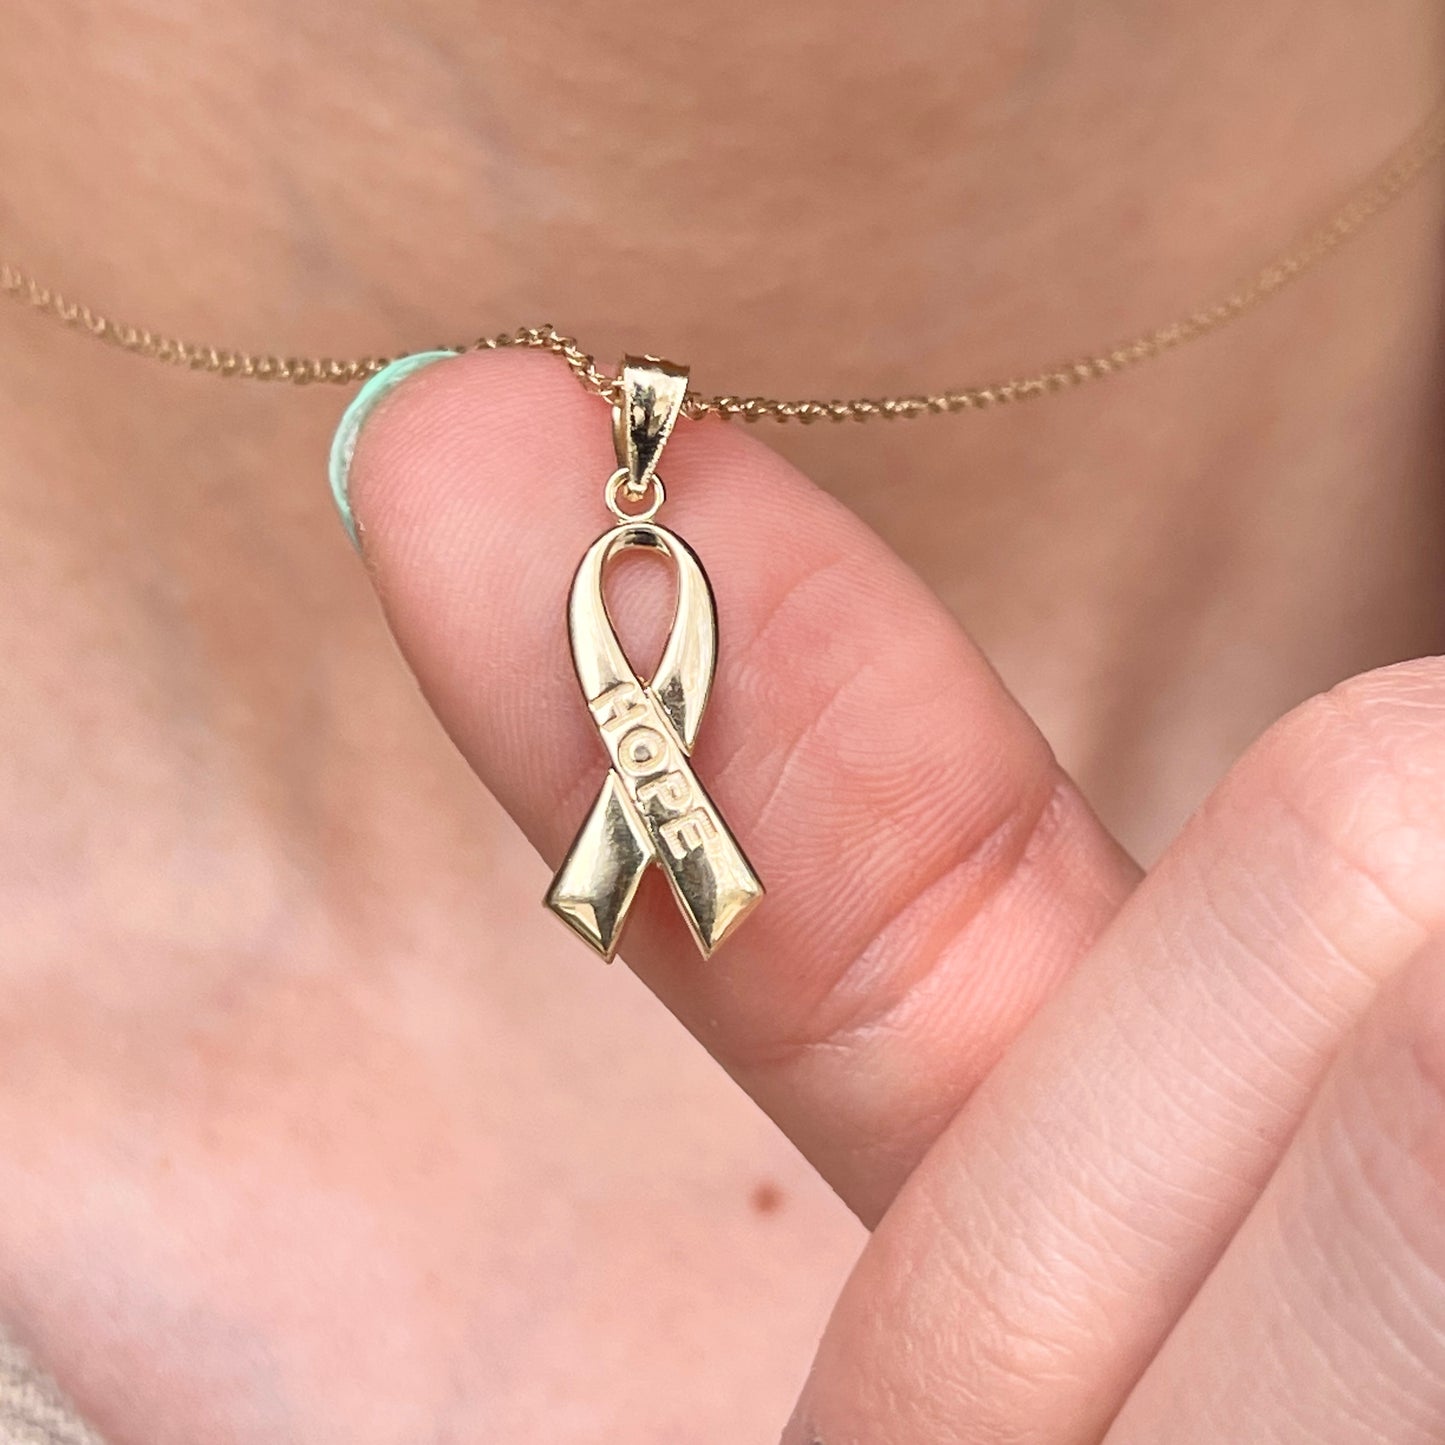 14KT Yellow Gold Cancer Awareness Hope Ribbon Pendant